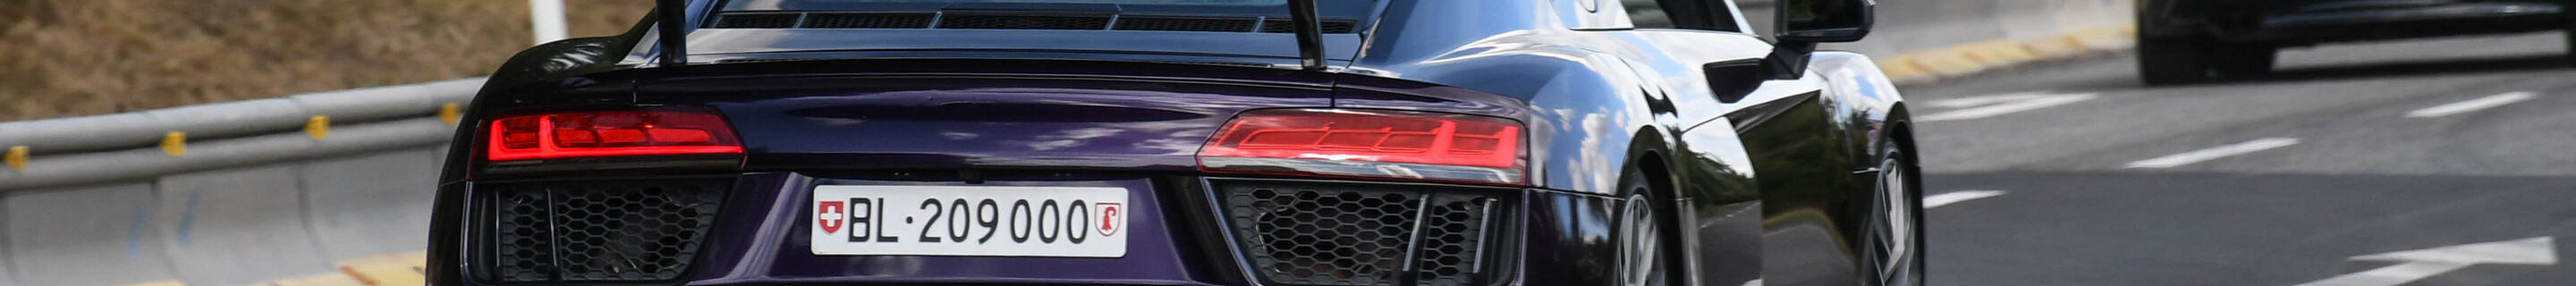 Audi R8 V10 Plus 2015 Vorsteiner